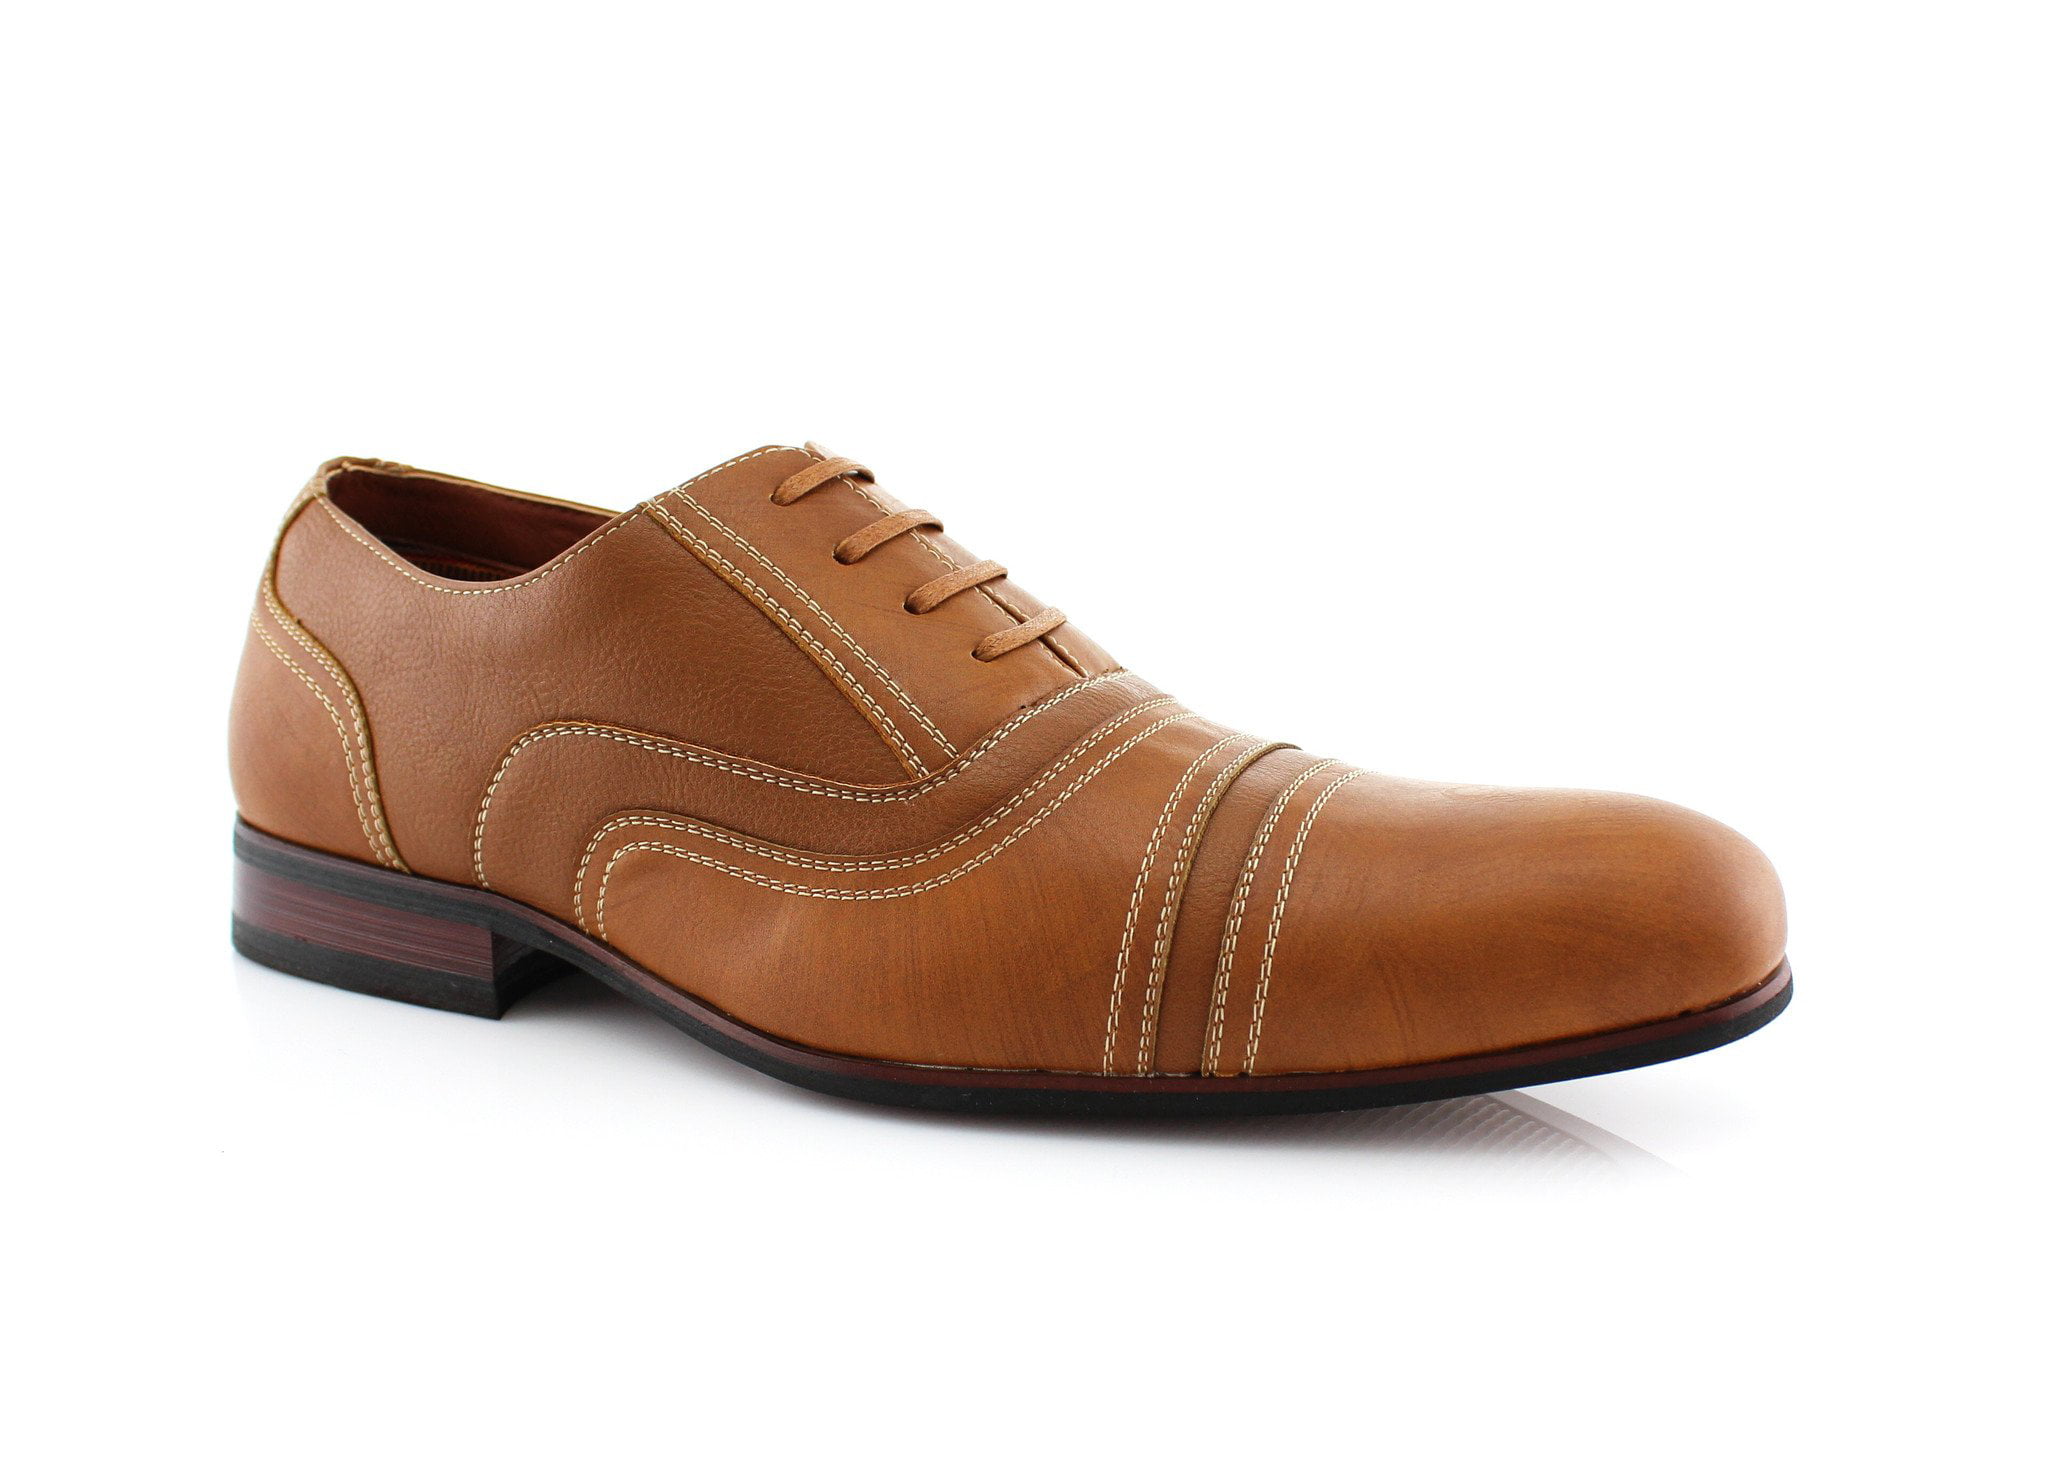 Details about   Men's Wingtip Smart Dress Formal Office Shoes Faux Leather Brogue Oxfords Casual 